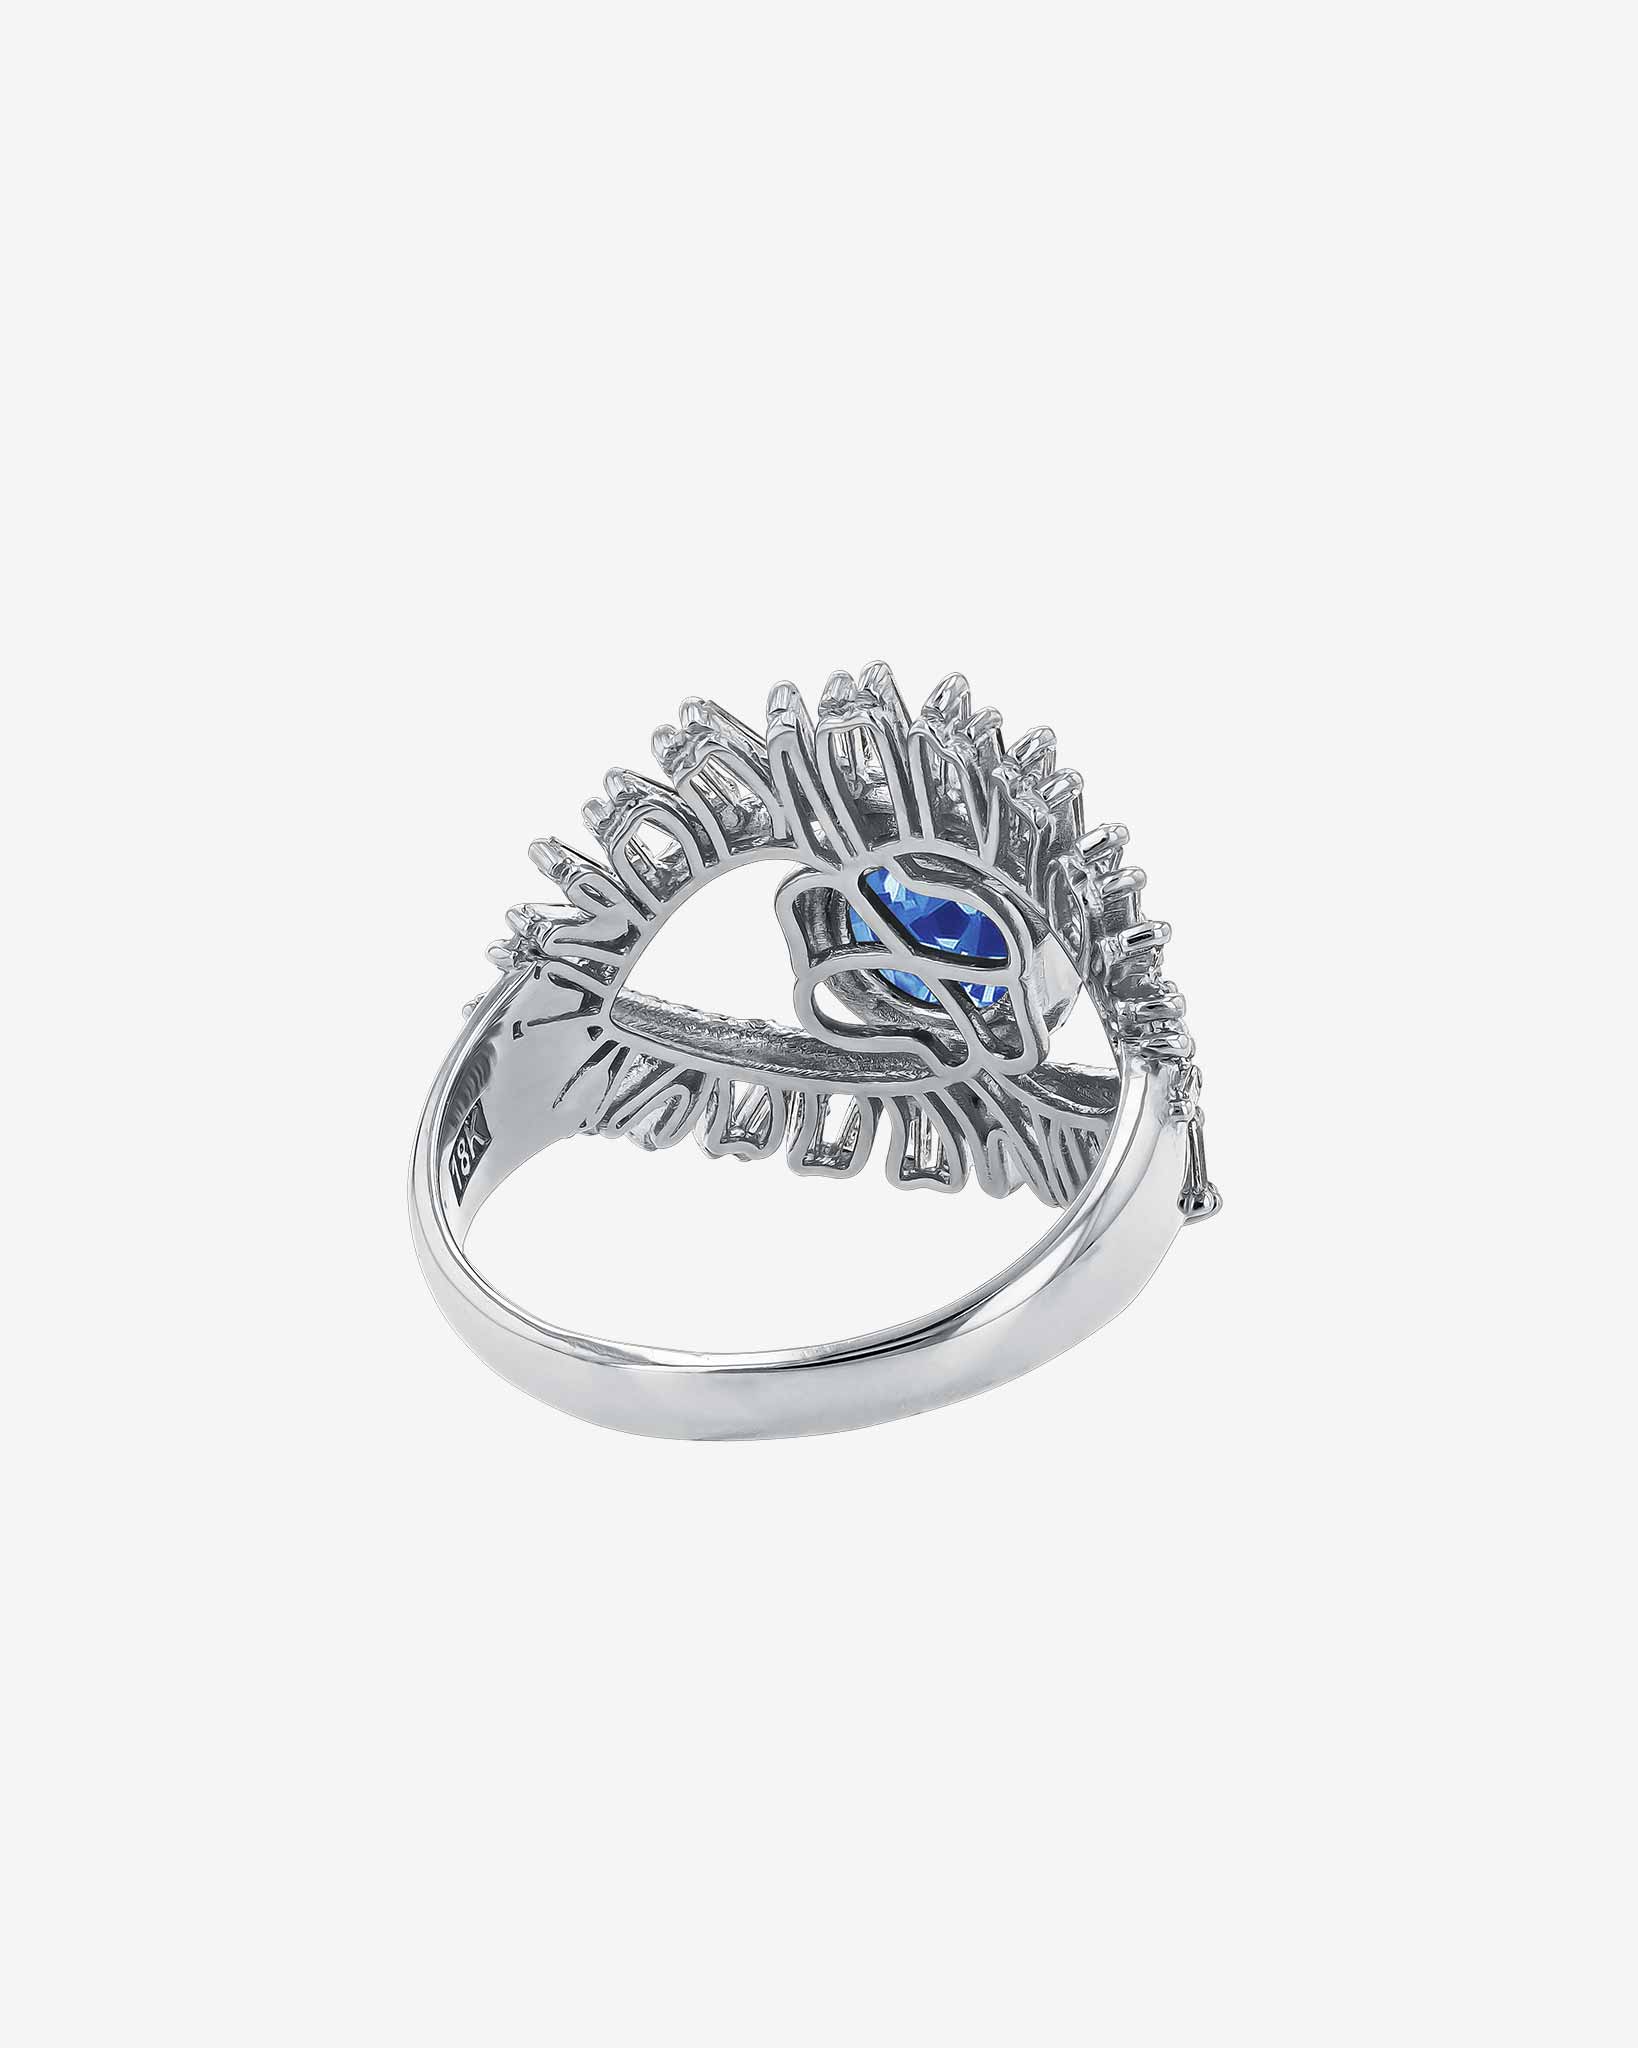 Suzanne Kalan Evil Eye Milli Light Blue Sapphire Half Pavé Ring in 18k white gold